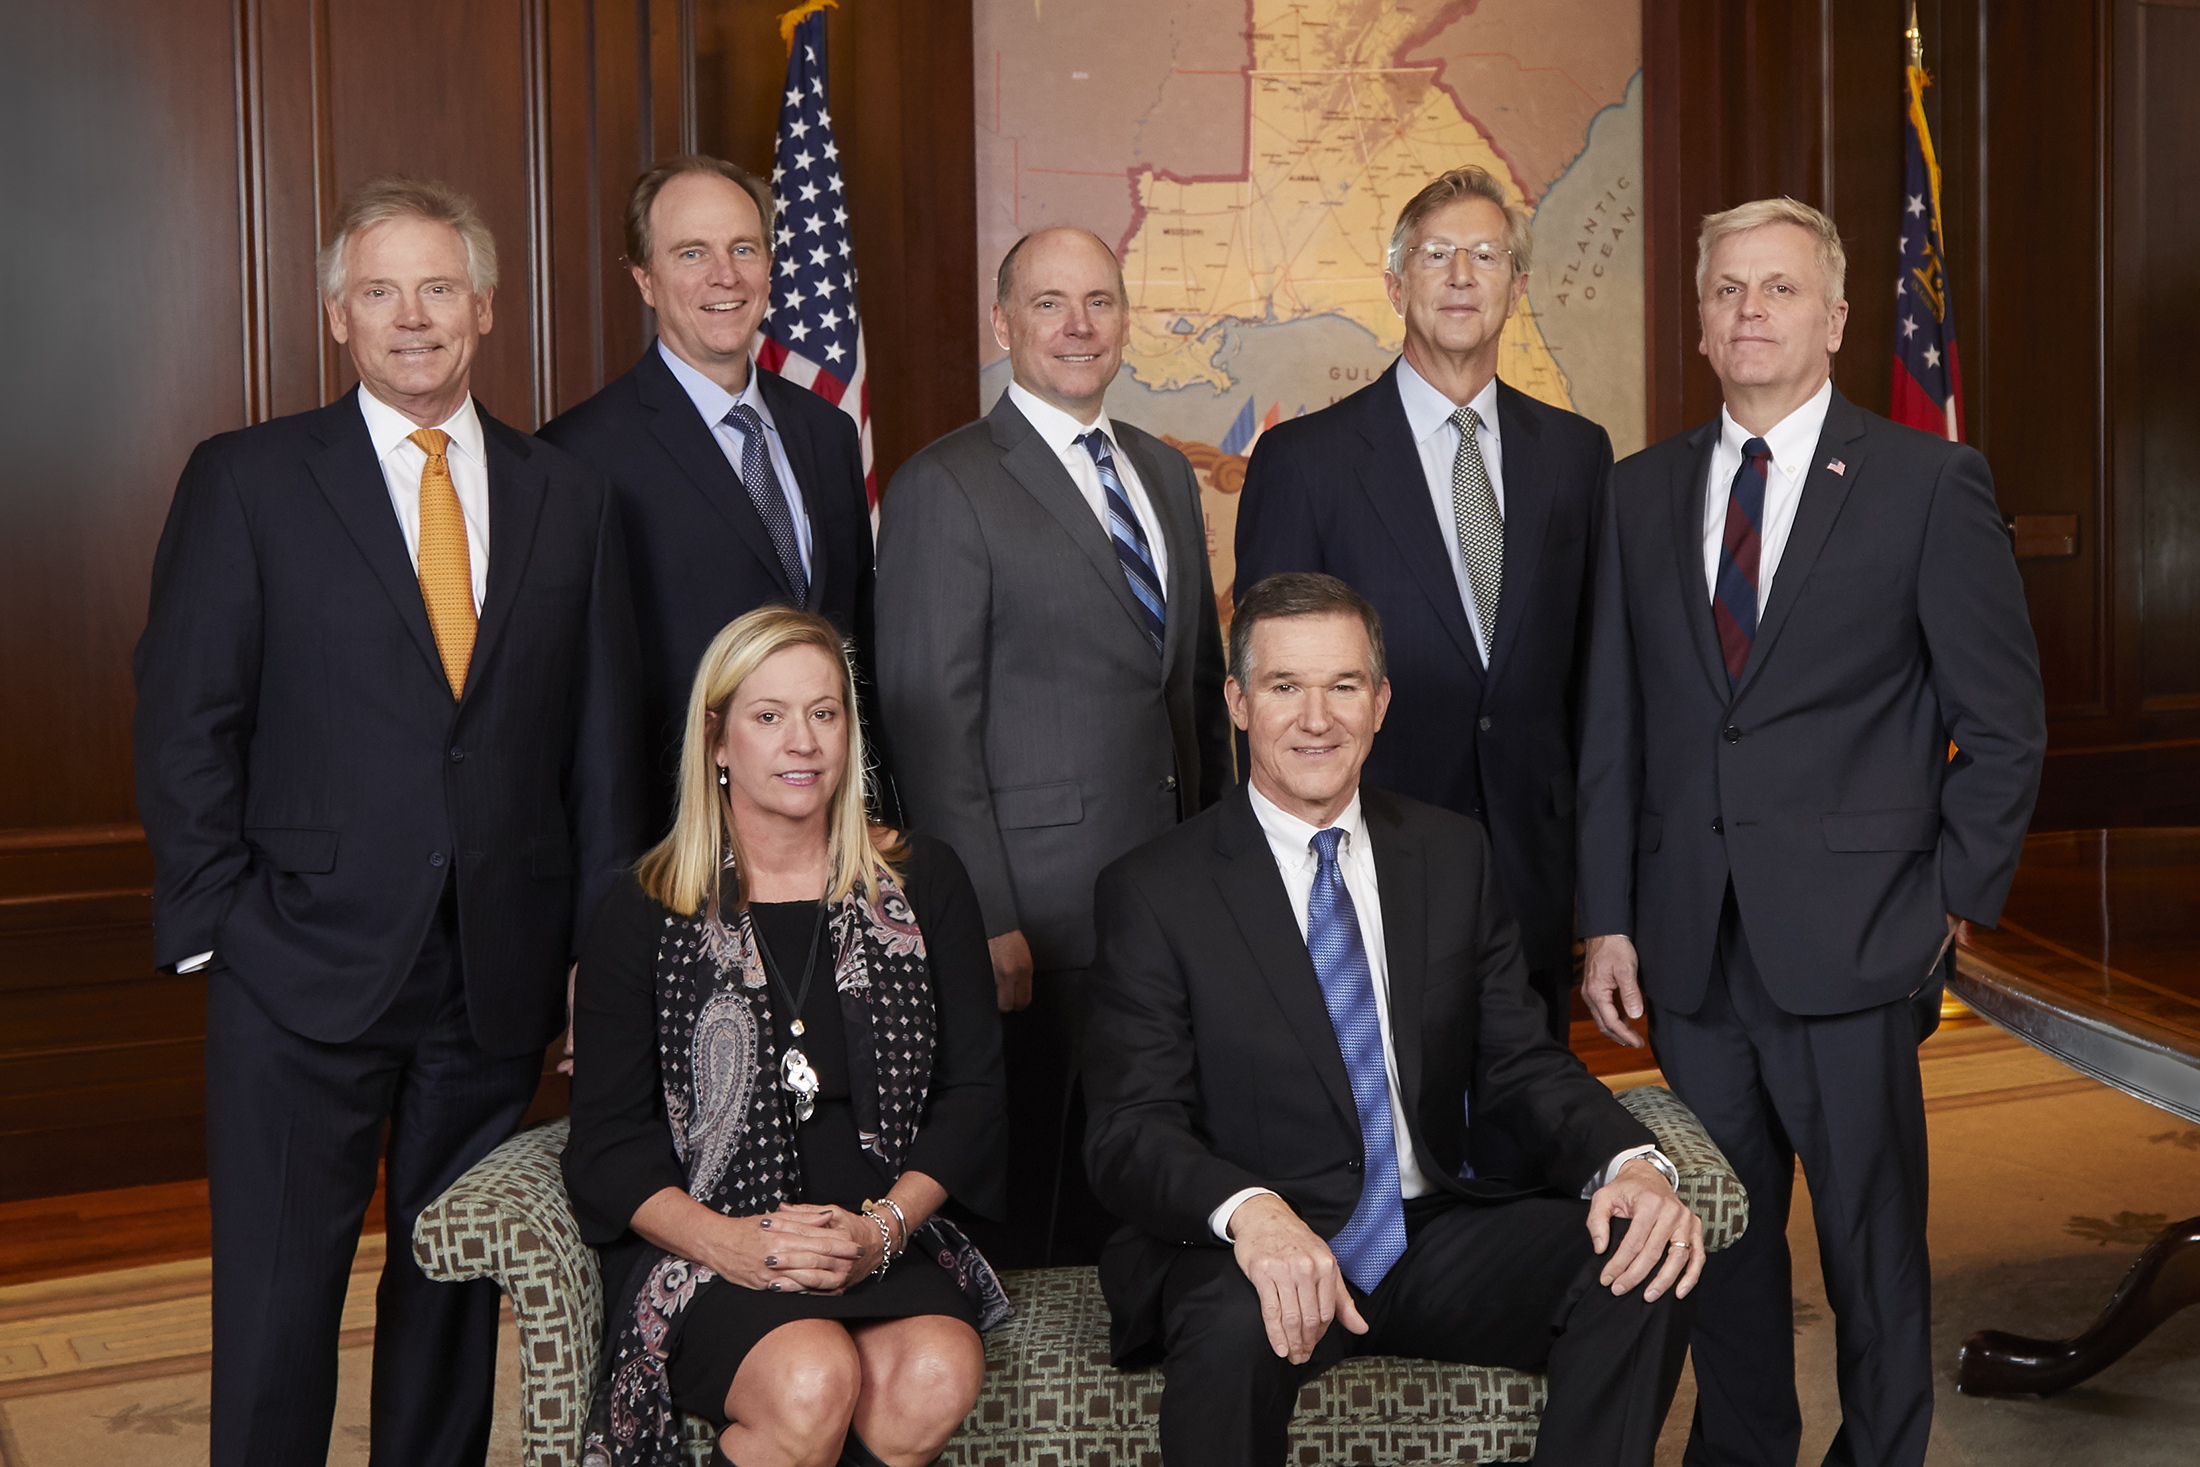 The Atlanta Fed's Energy Advisory Council